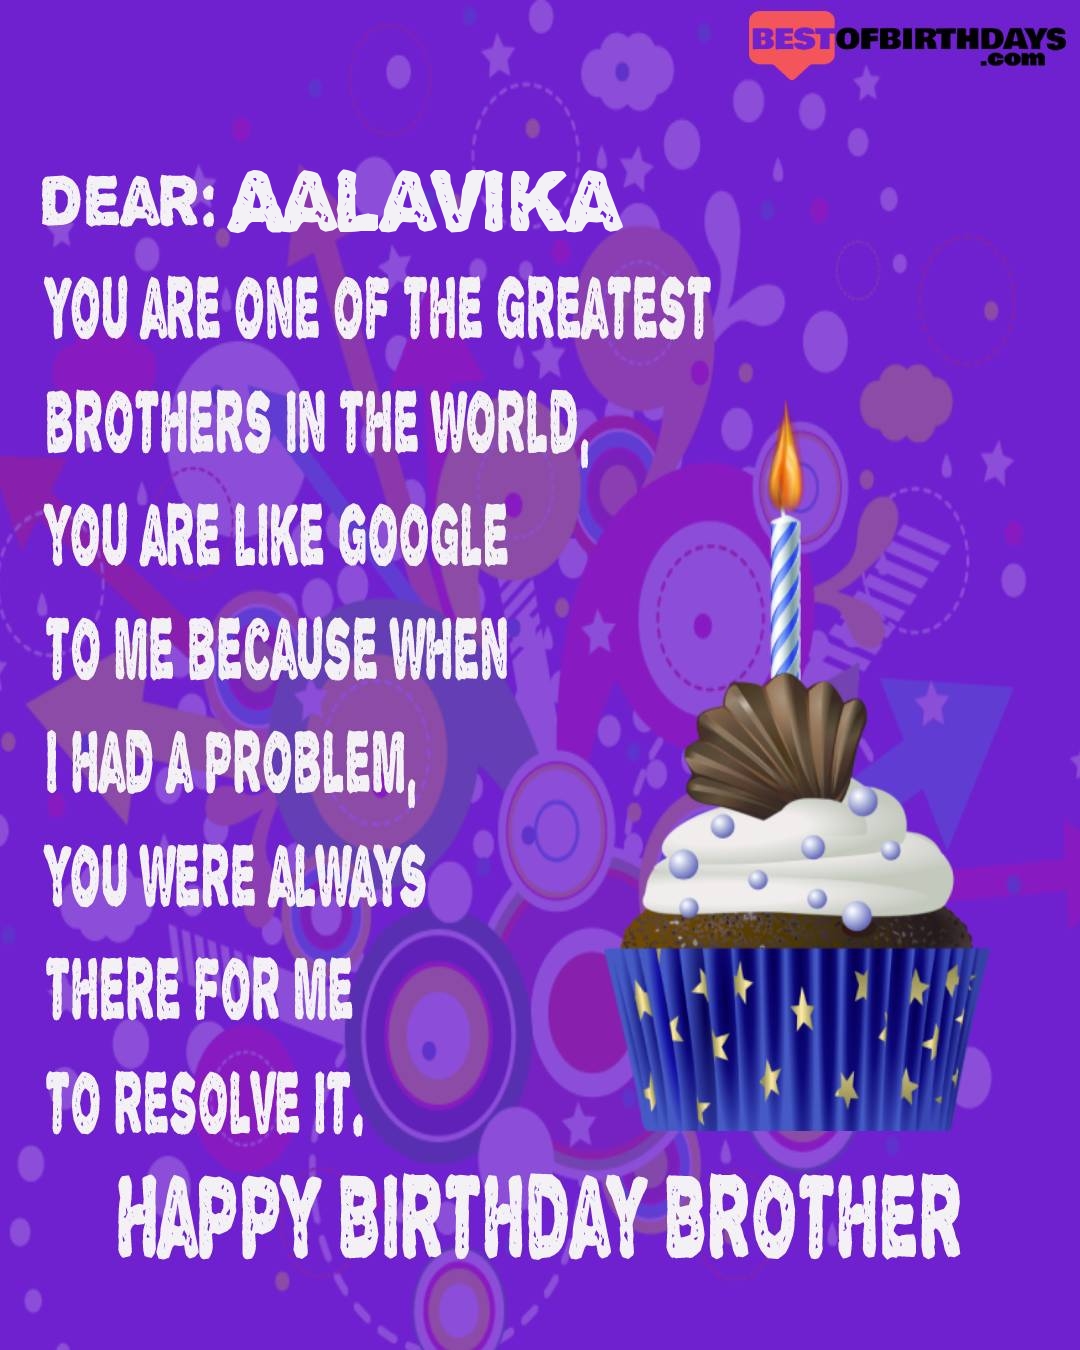 Happy birthday aalavika bhai brother bro